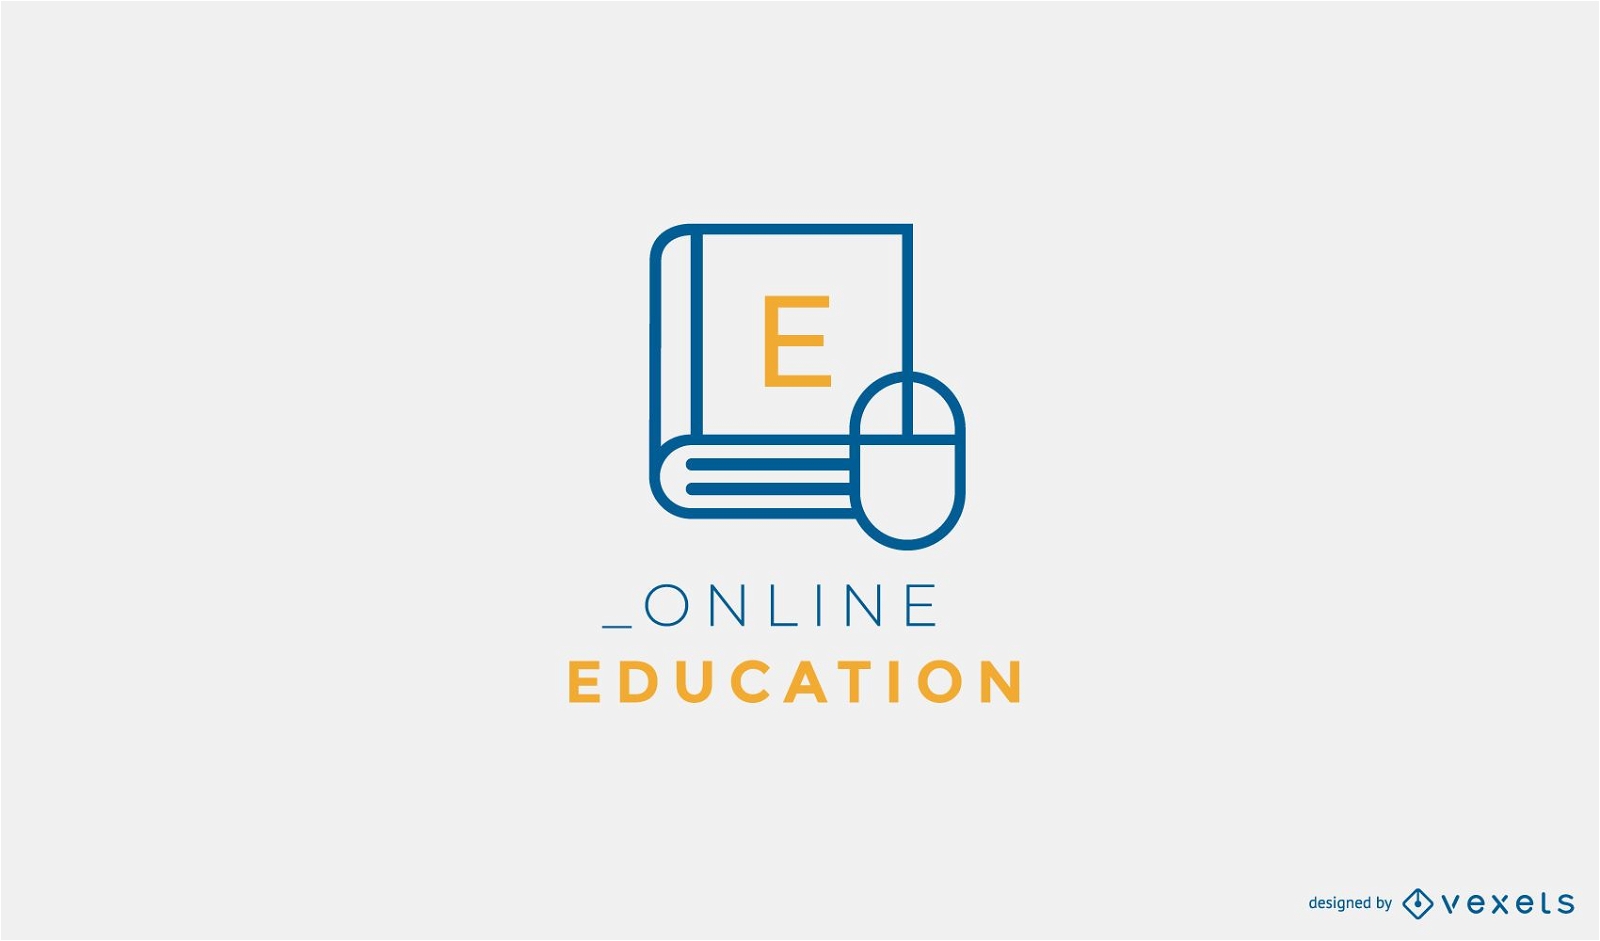 Online education logo design